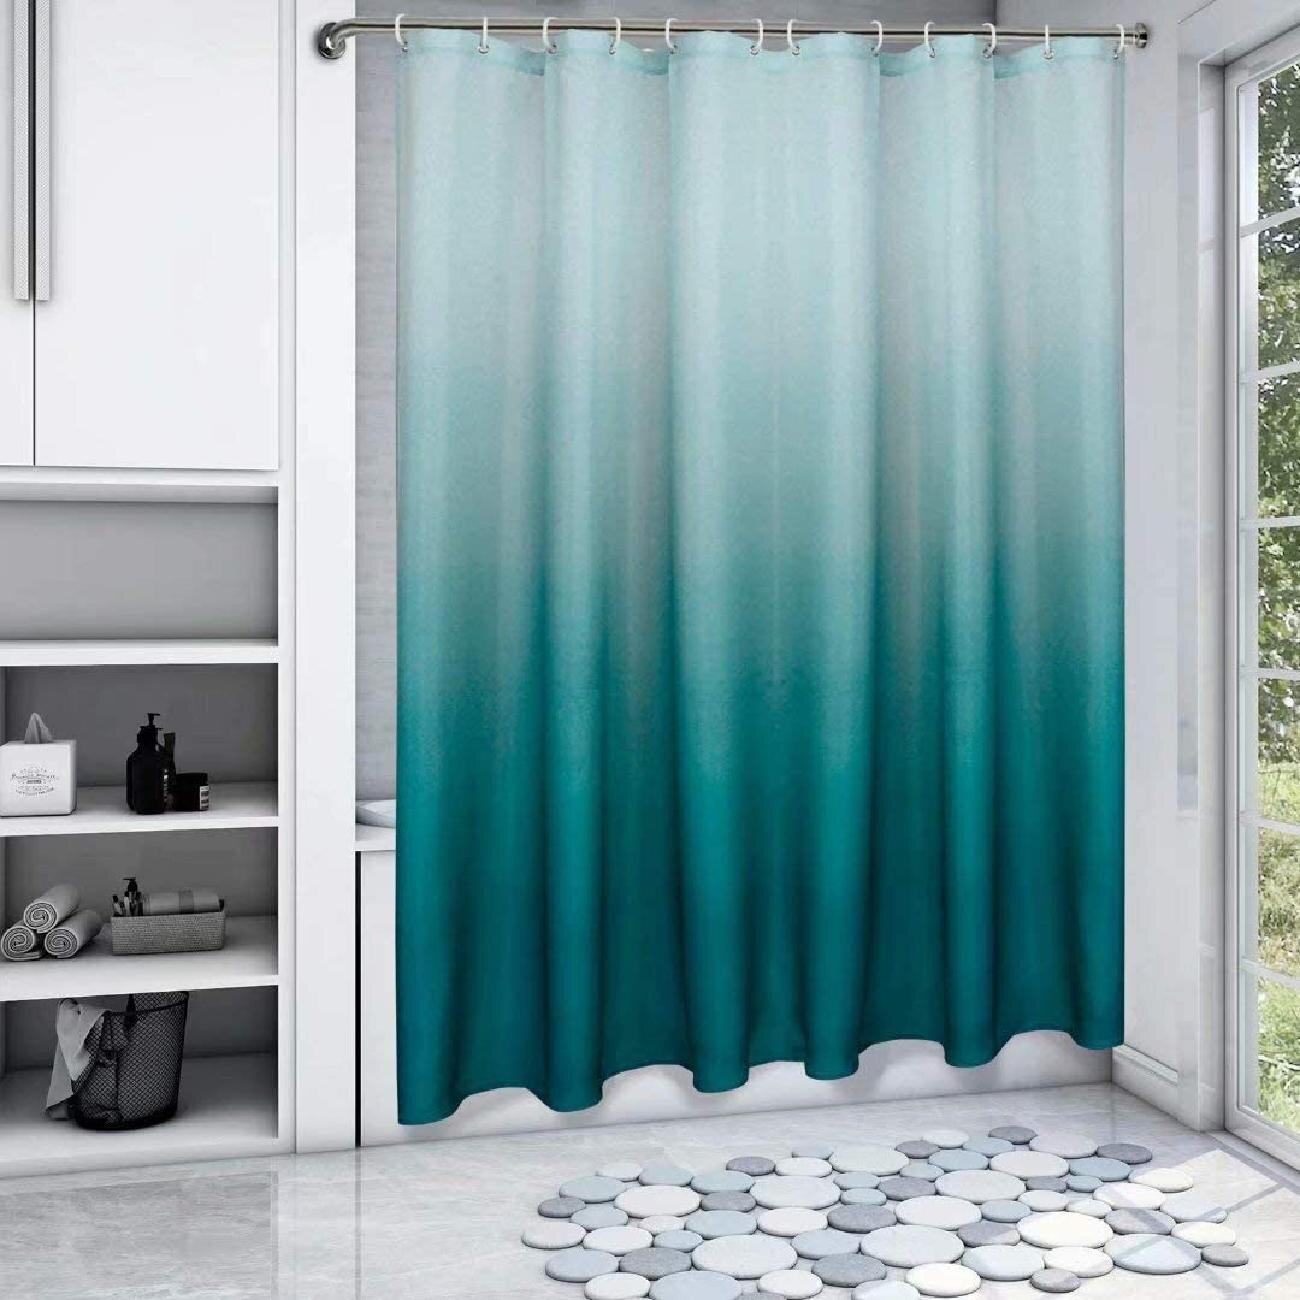 4 Style Waterproof Fabric Shower Curtain Bathroom Washroom Decor W//12 Hooks